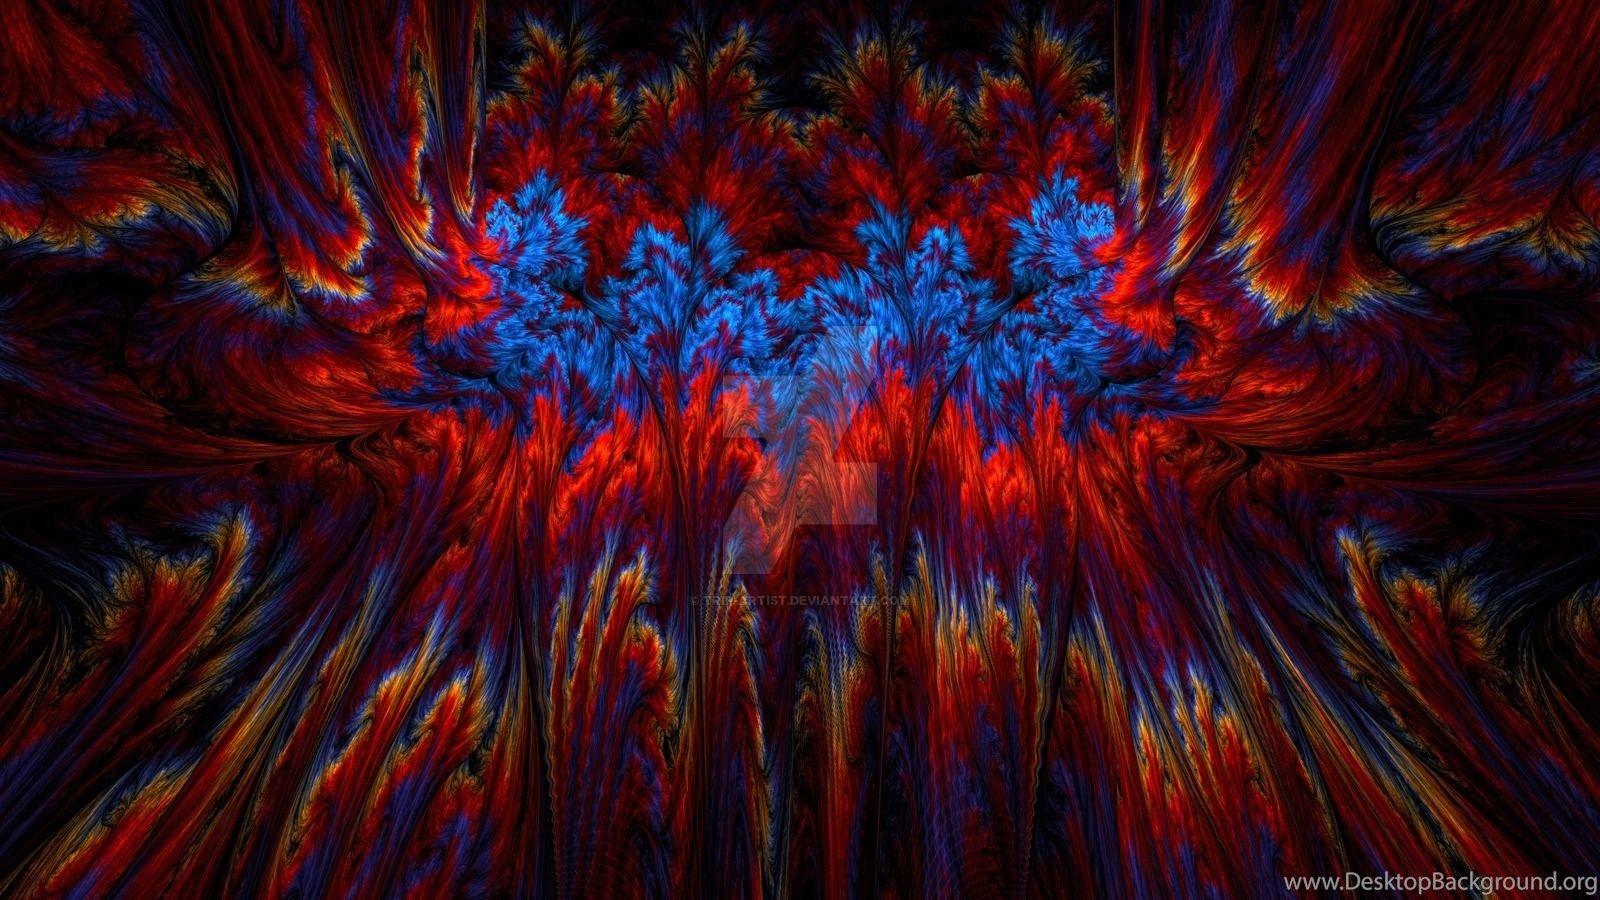 Psychedelic Spectra HD Wallpaper By Trip Artist